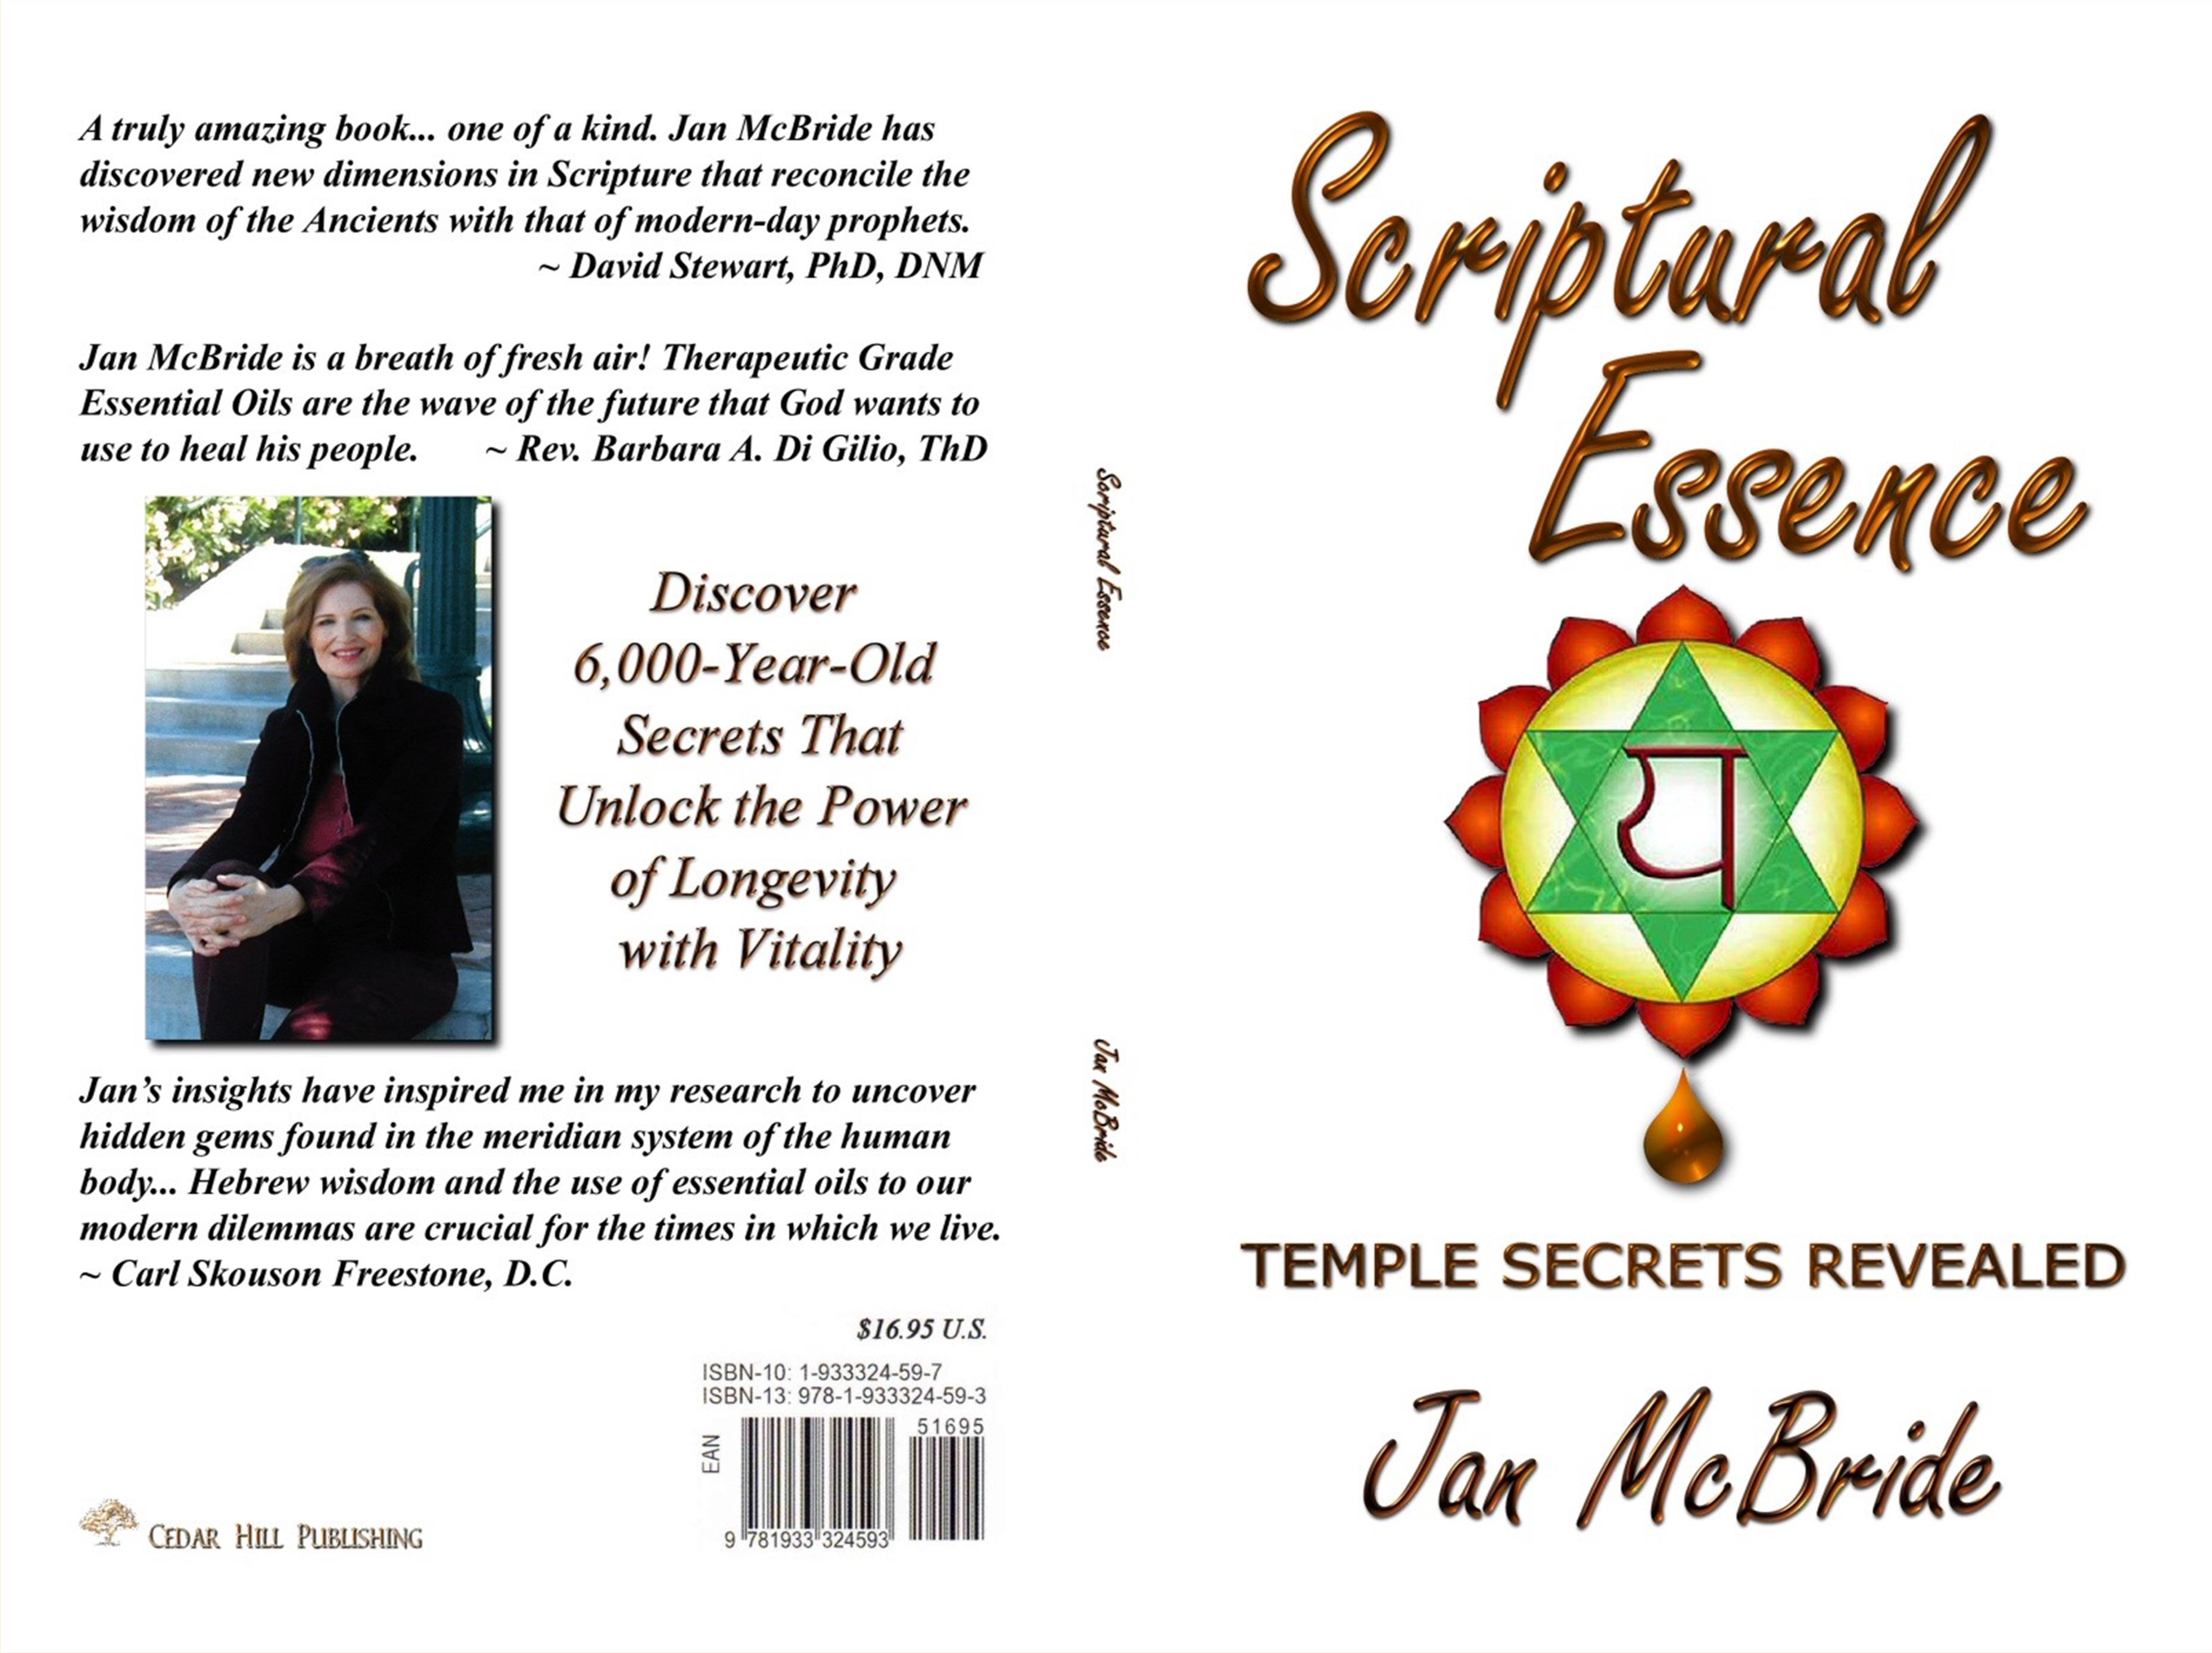 SCRIPTURAL ESSENCE, TEMPLE SECRETS REVEALED cover image